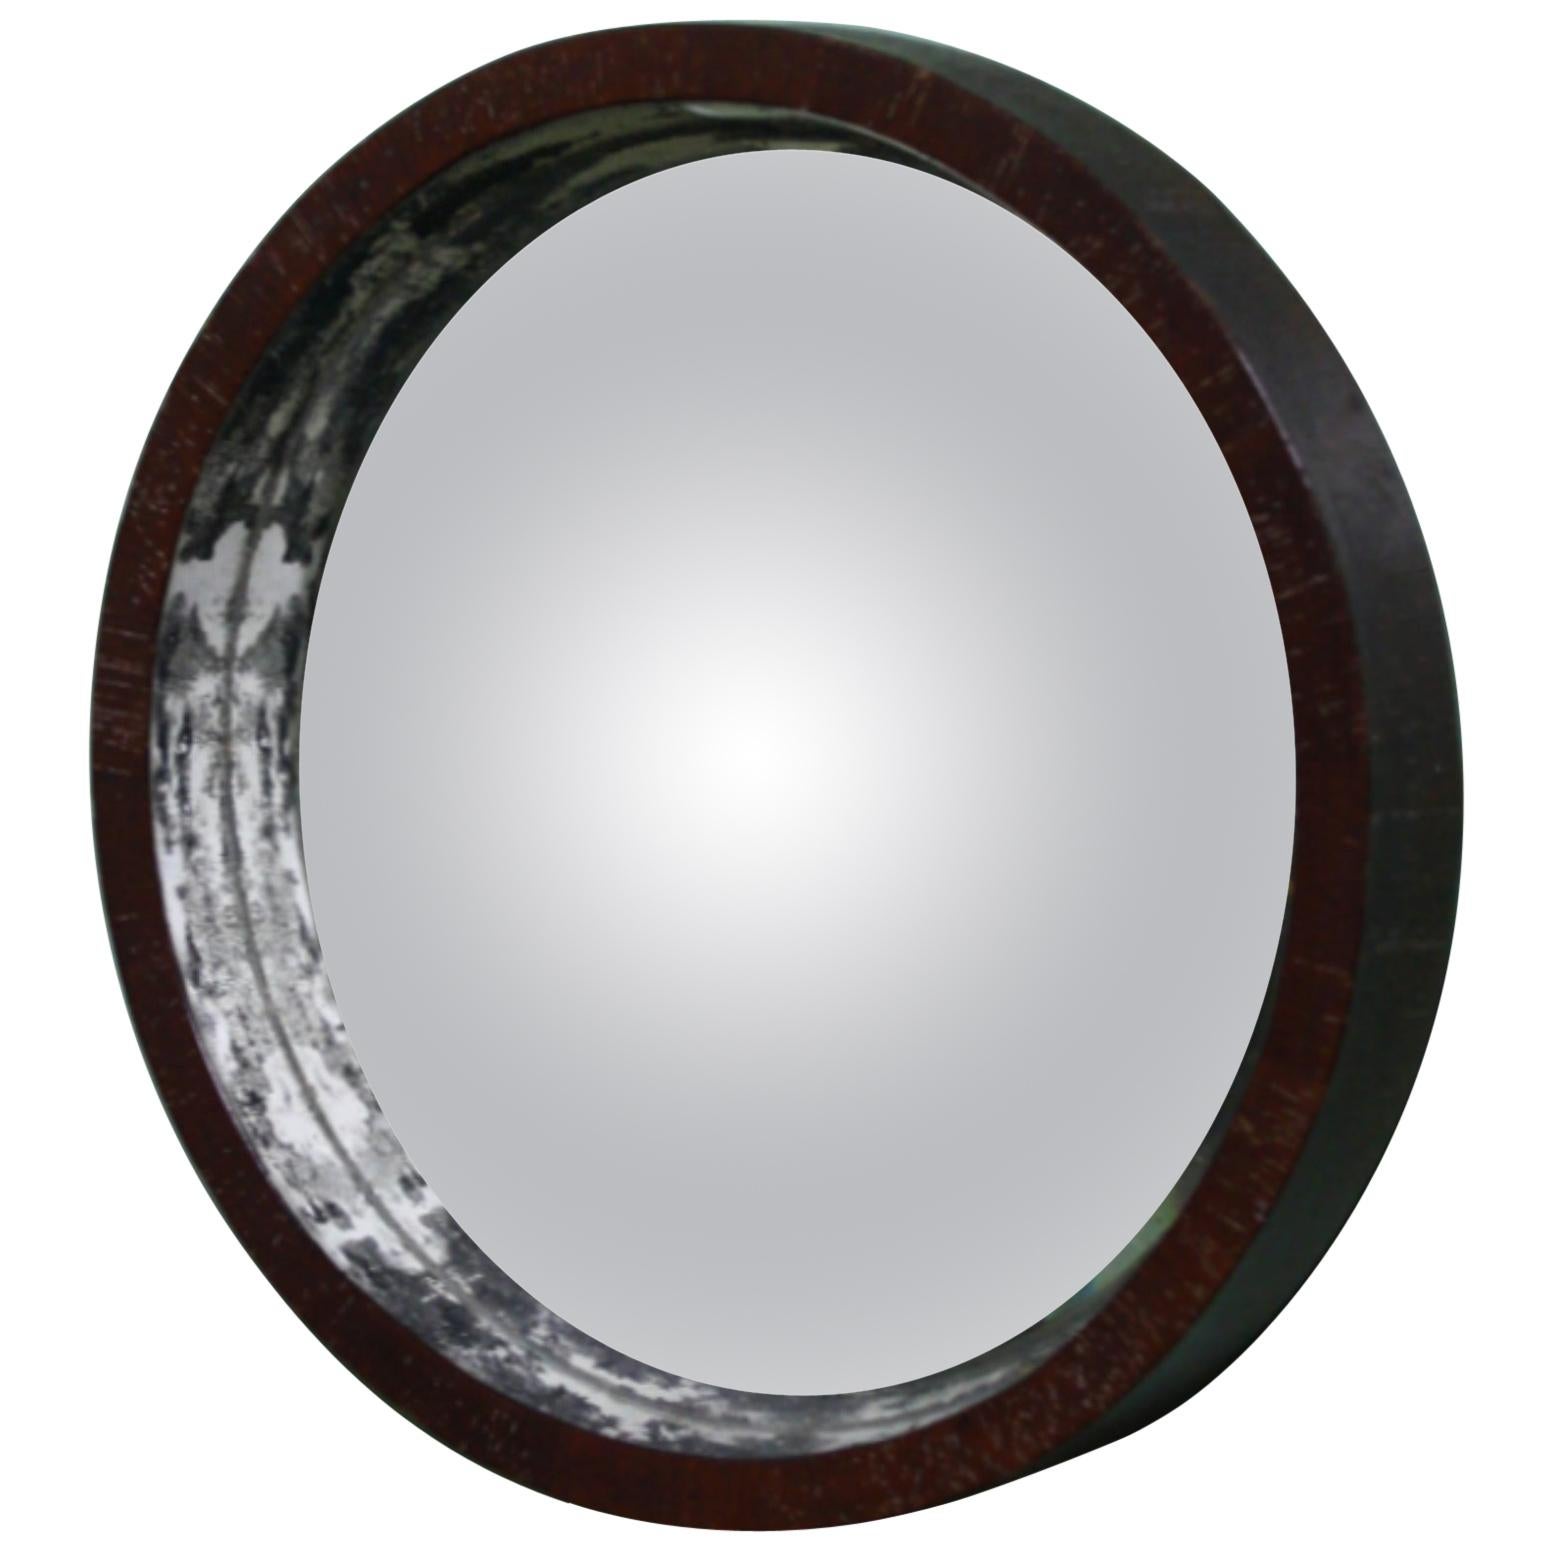 19th Century Curious Convex Circular Mirror, with a Concave Lens Mahogany Frame